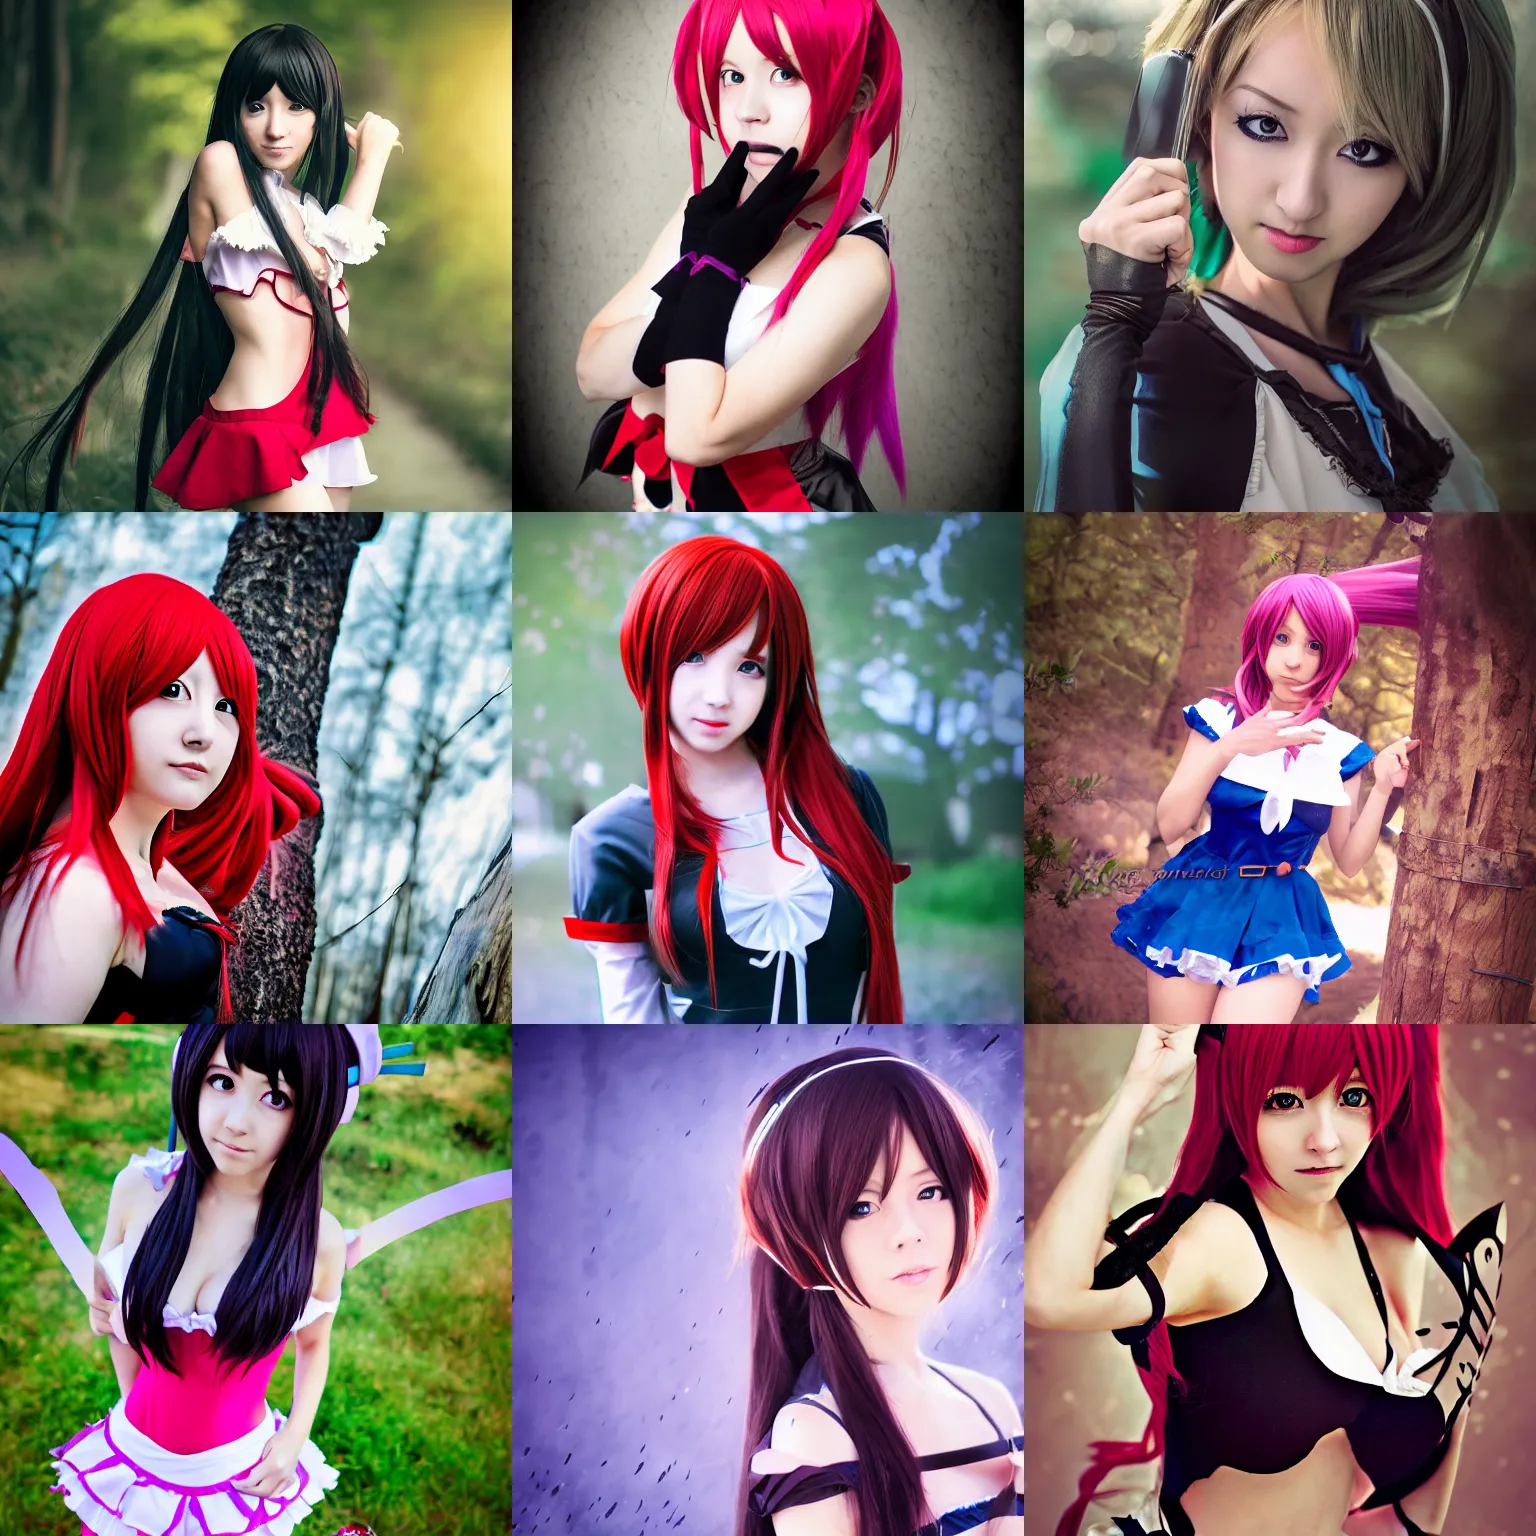 Prompt: anime girl cosplay, professional photograph, professional photoshoot, digital enhancement, 4k